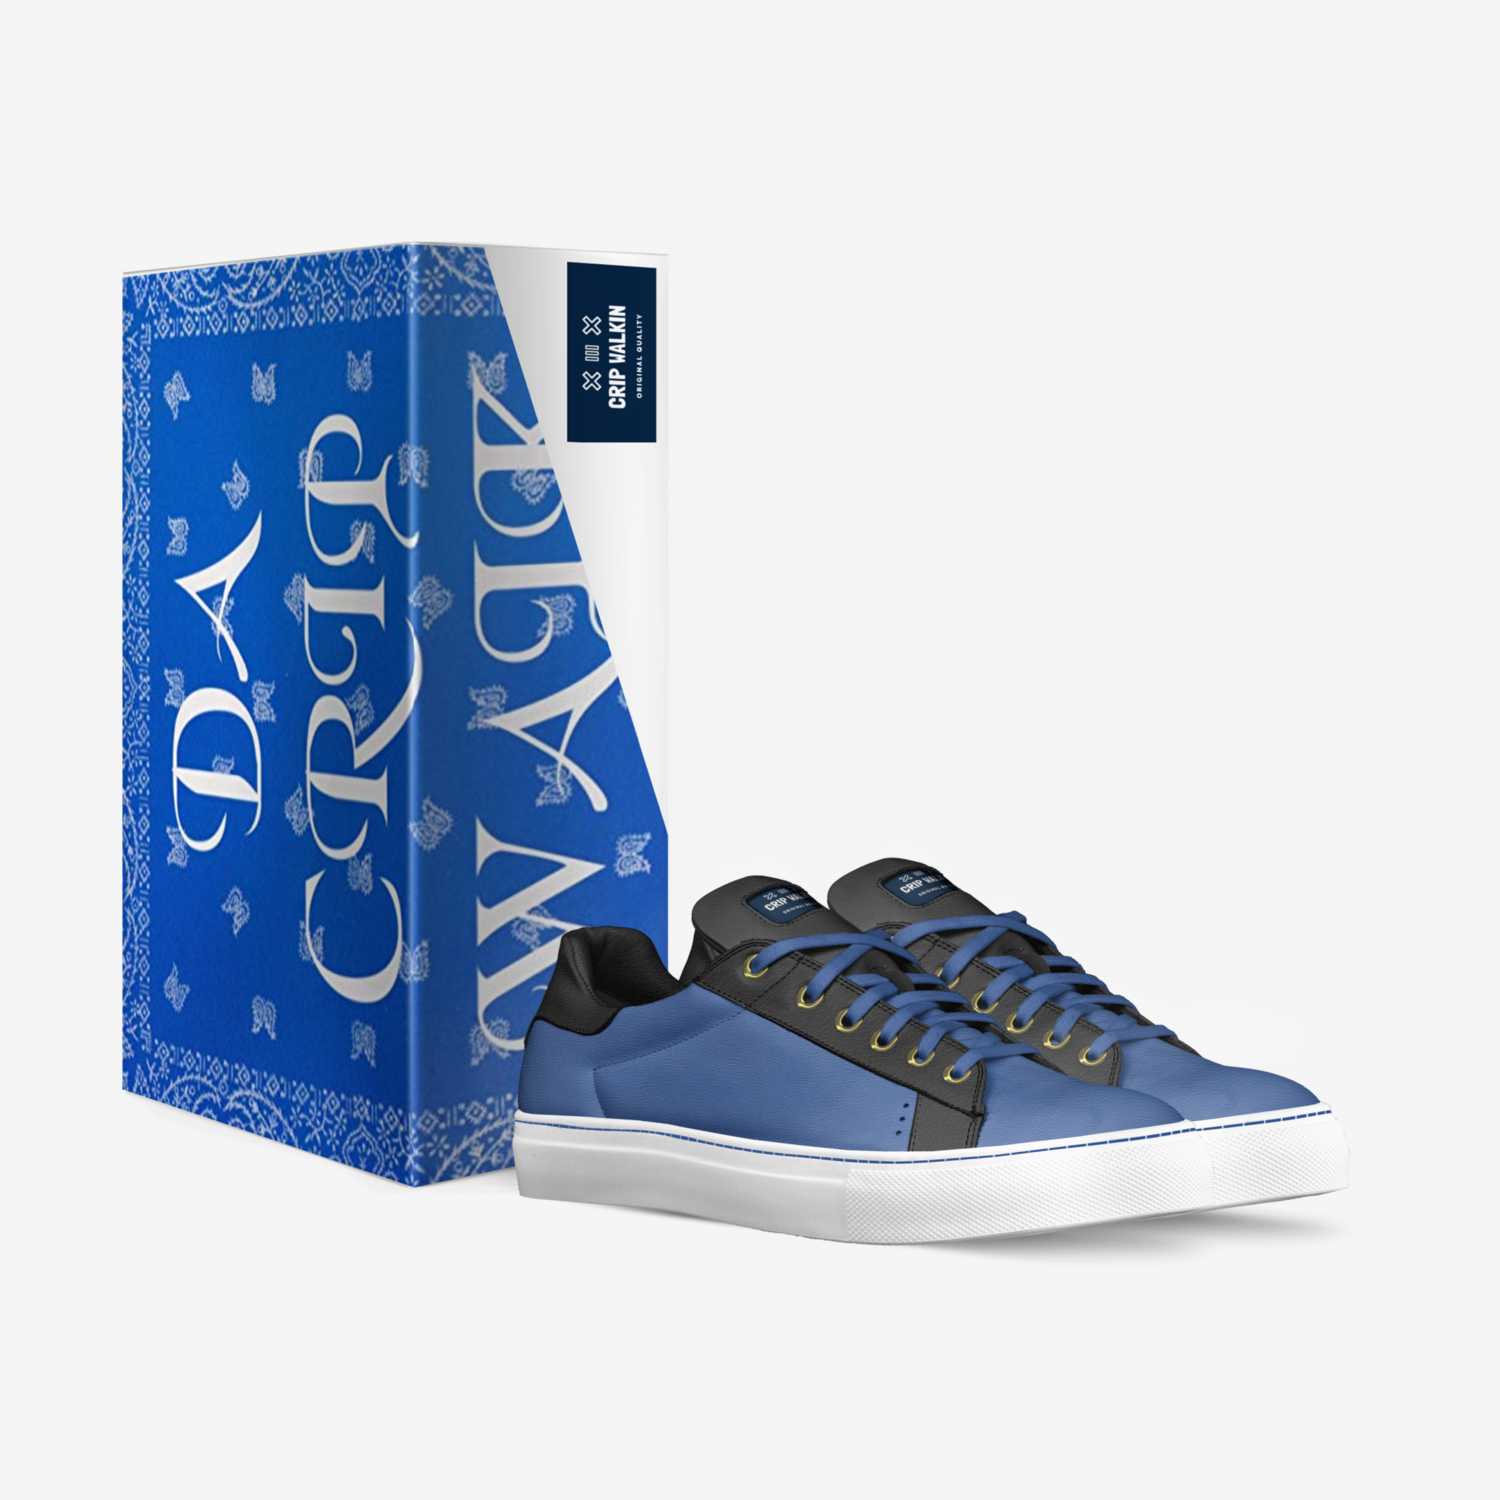 Crip Walkin  custom made in Italy shoes by Bo$$ton J | Box view